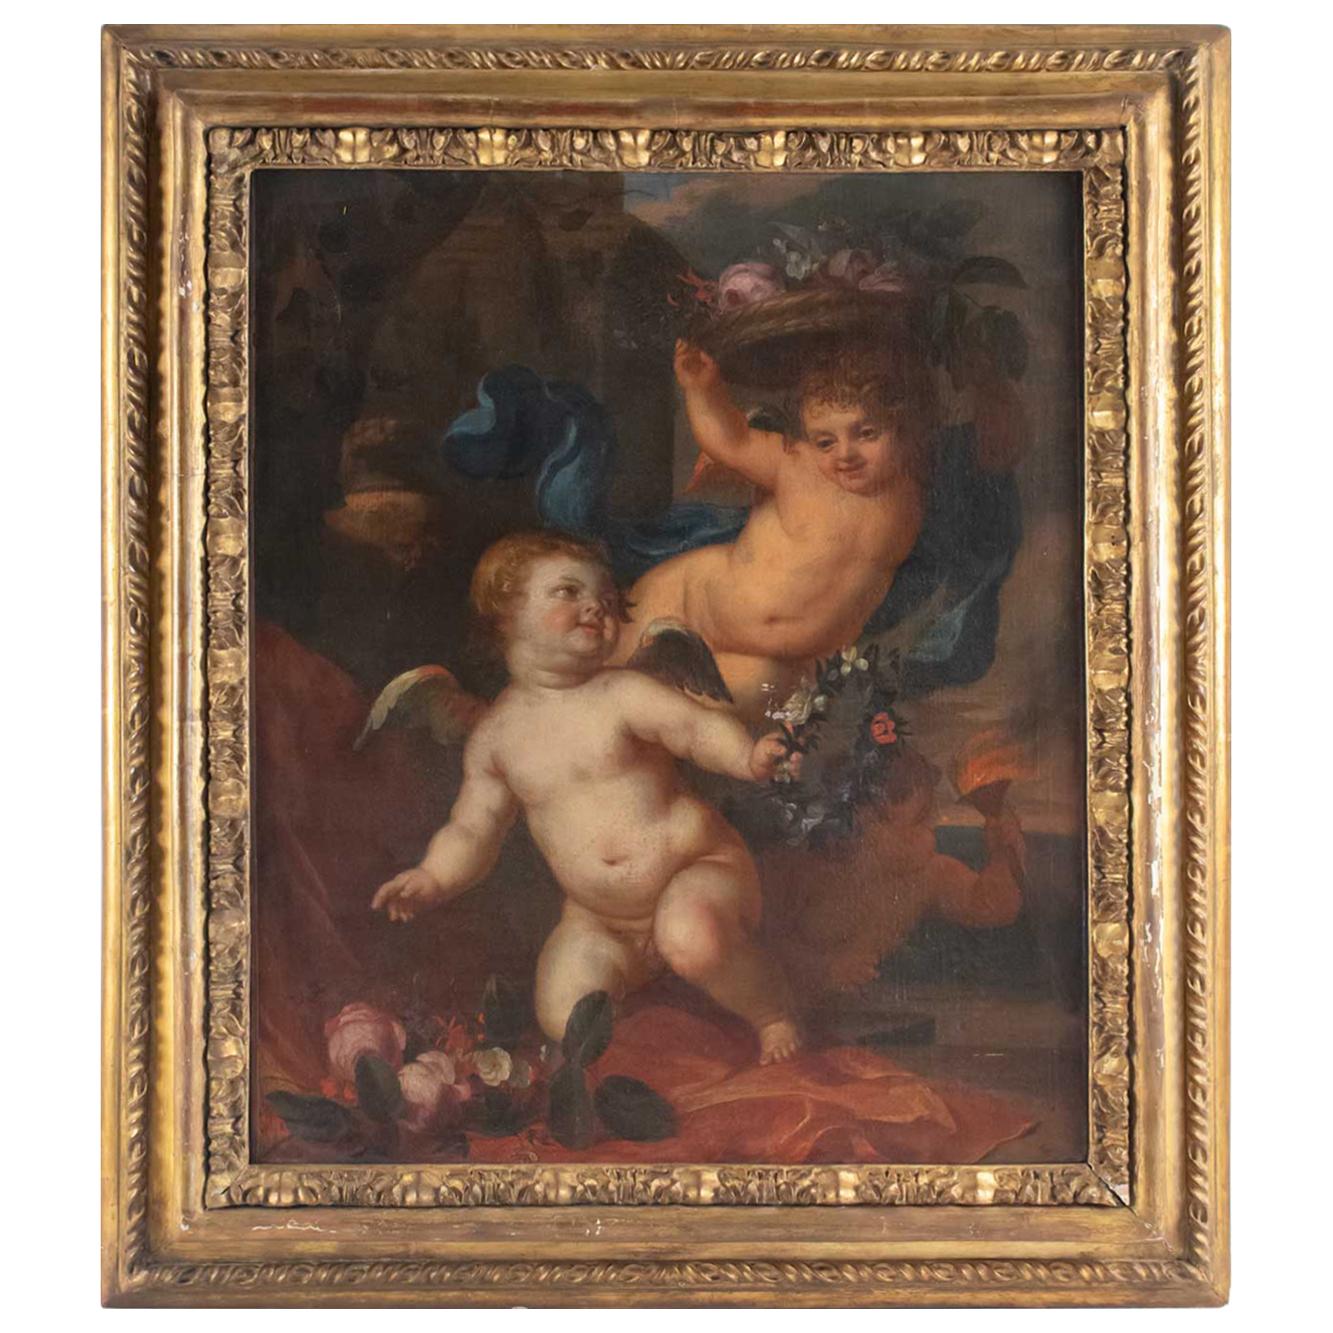 Painting, Oil on Canvas, Flemish, 17th Century, Representative Three Loves